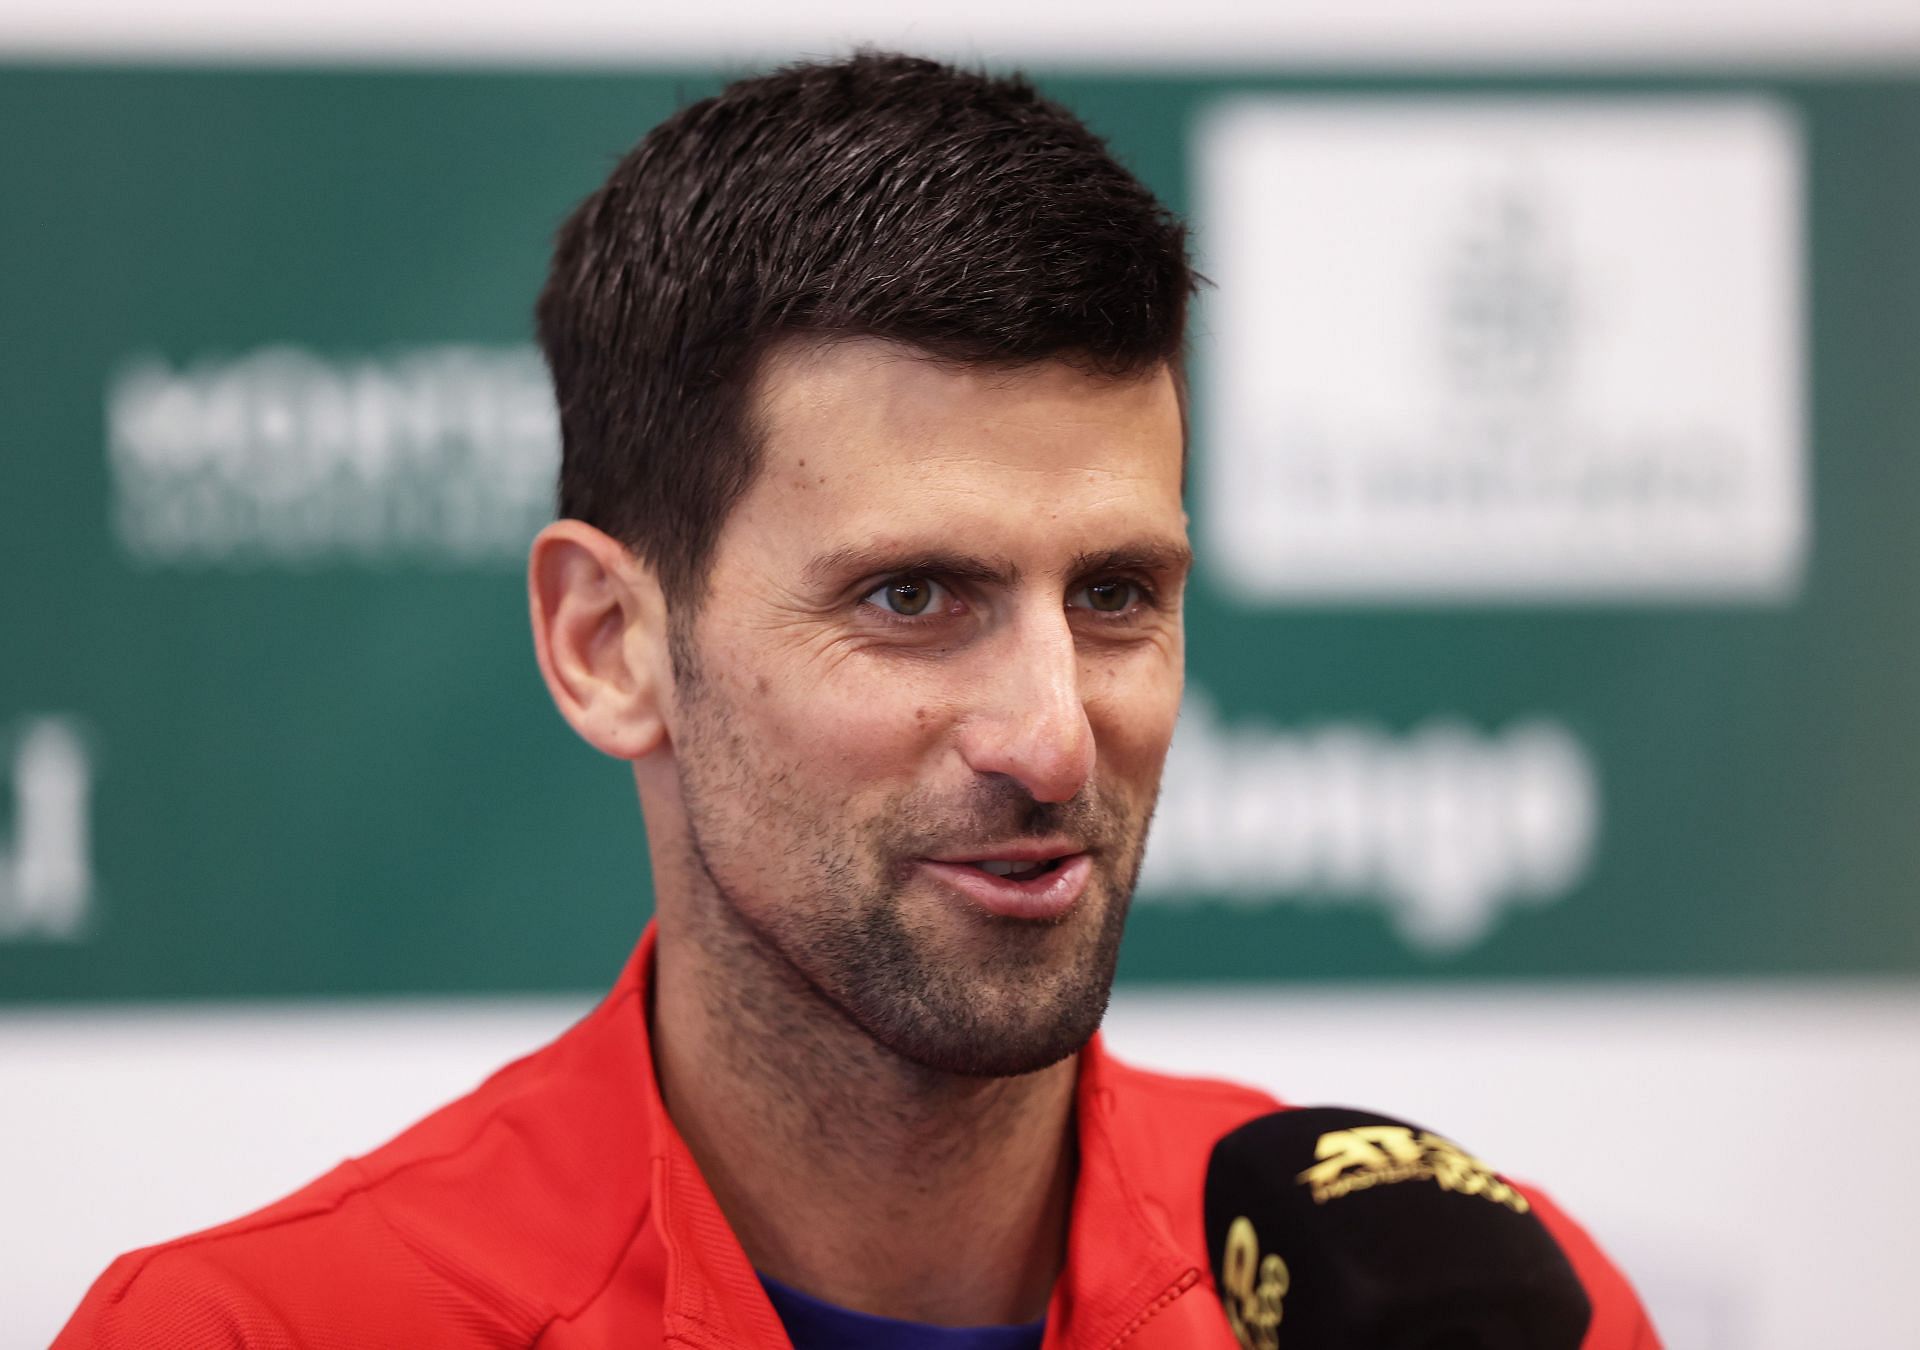 Novak Djokovic is a 21-time Grand Slam winner